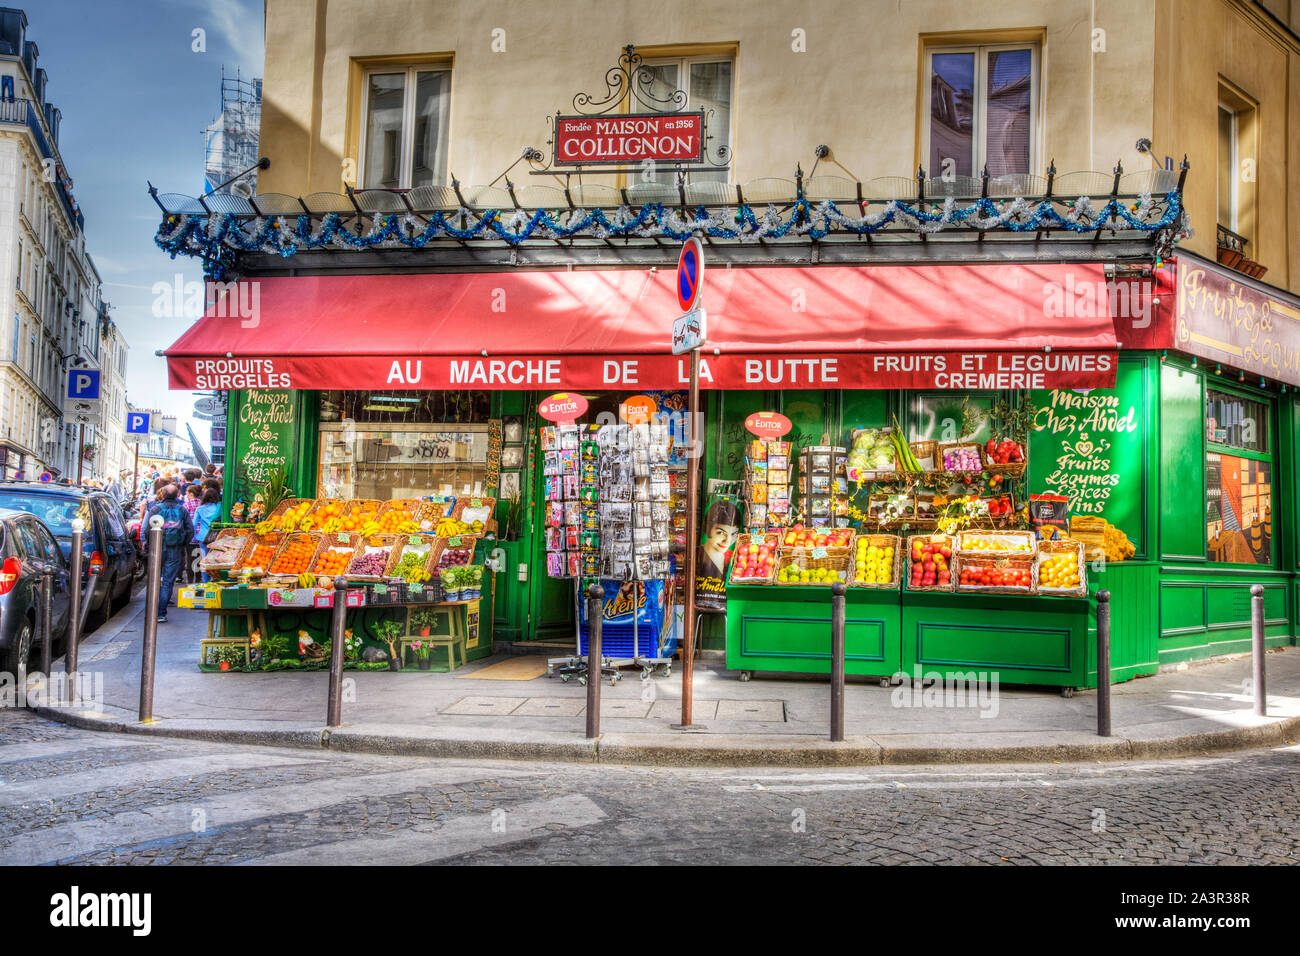 Au Marche de la Butte - Market in Montmartre, used in film "Amelie" Stock Photo